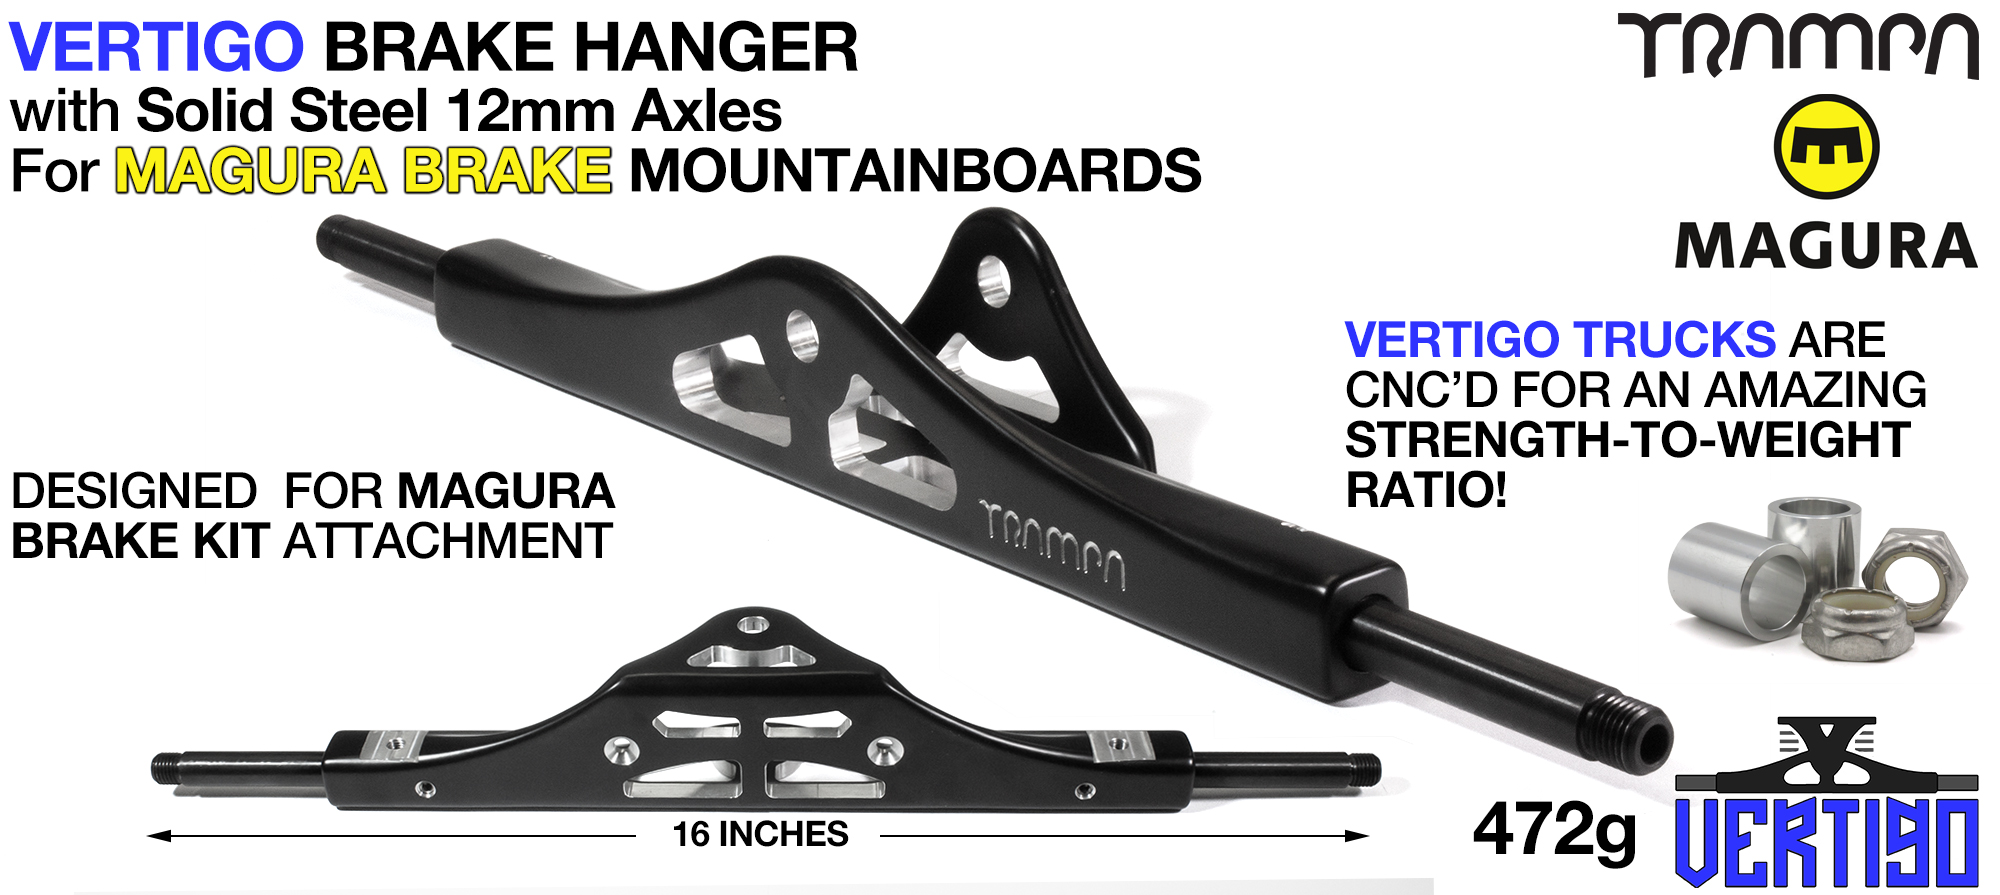 VERTIGO Brake Hanger - HOLLOW Axles modifed to fit MAGURA Hydraulic brakes